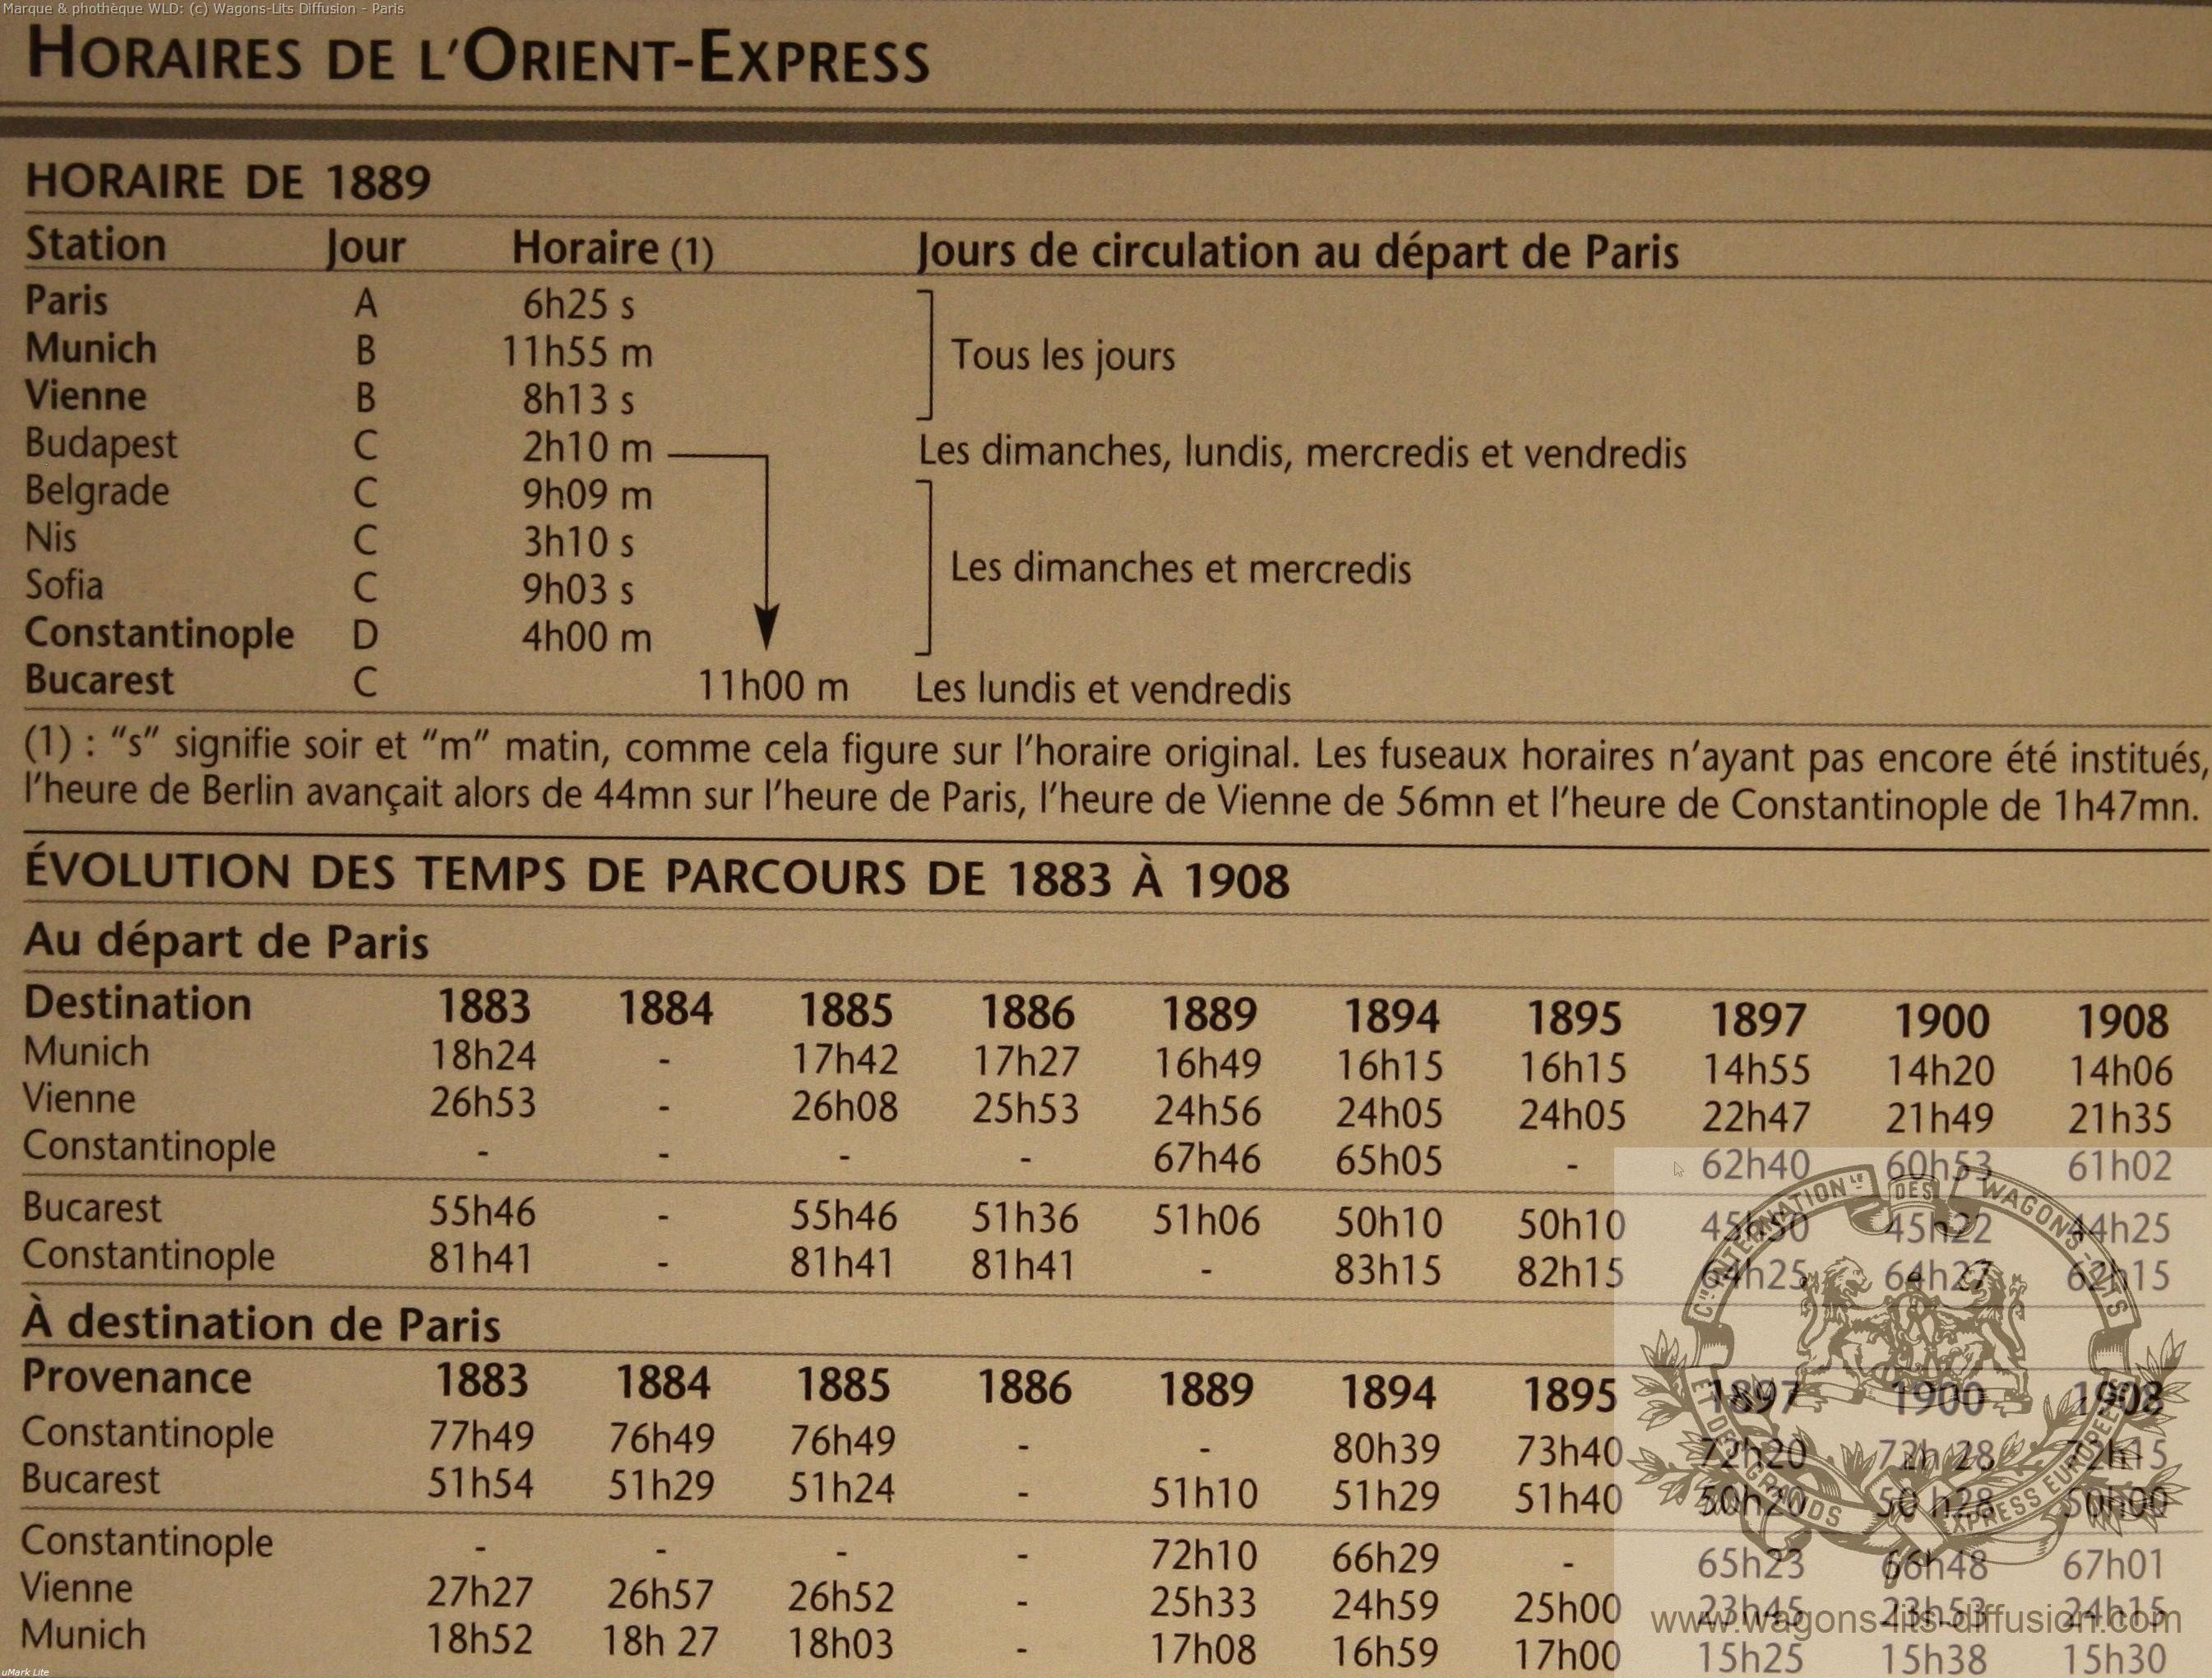 Wl horaires orient express 1889